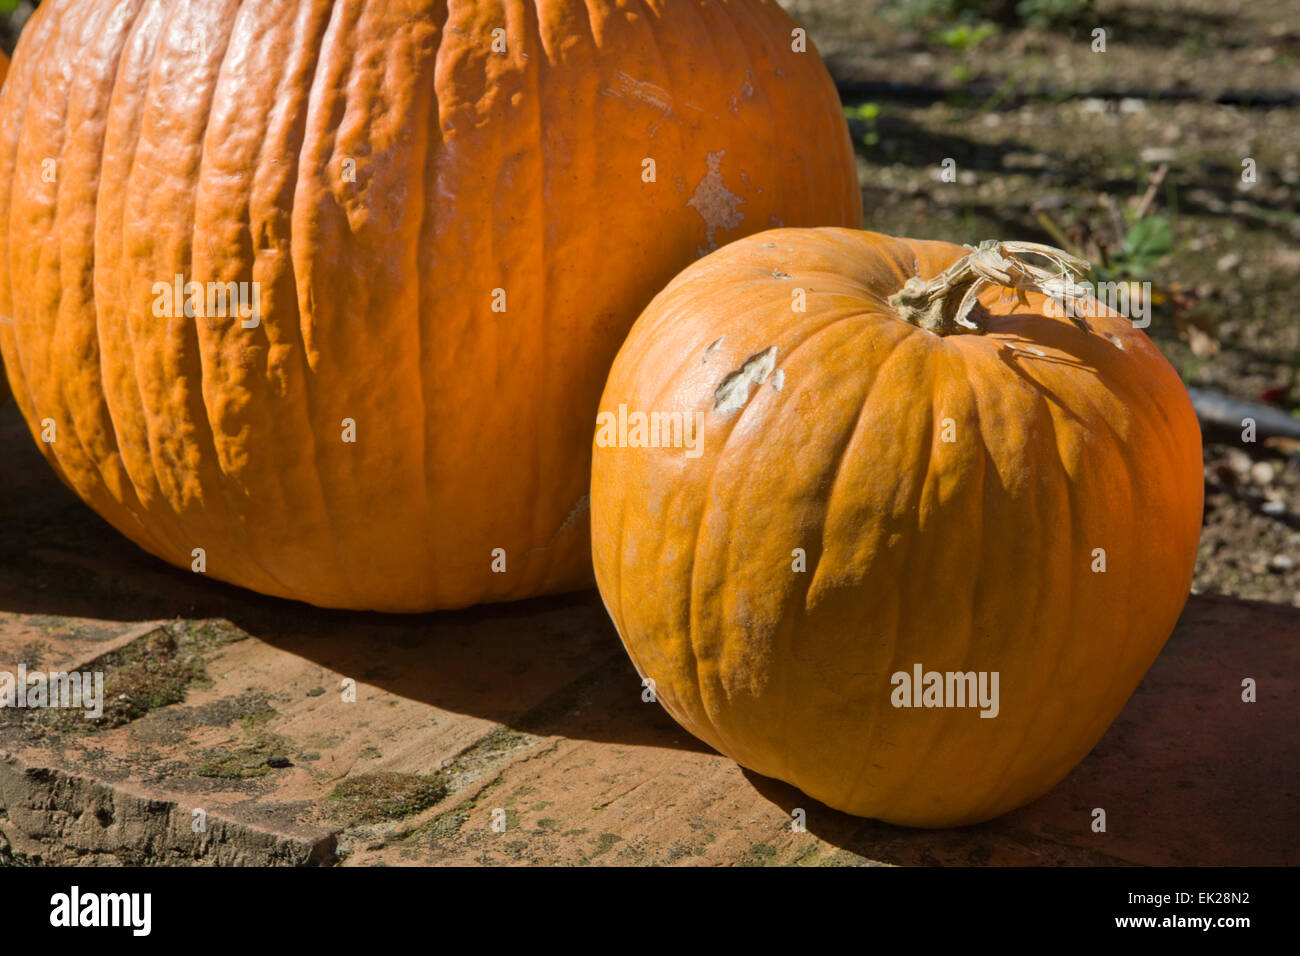 Big orange pumpkins sitting in the sun, Spain Stock Photo